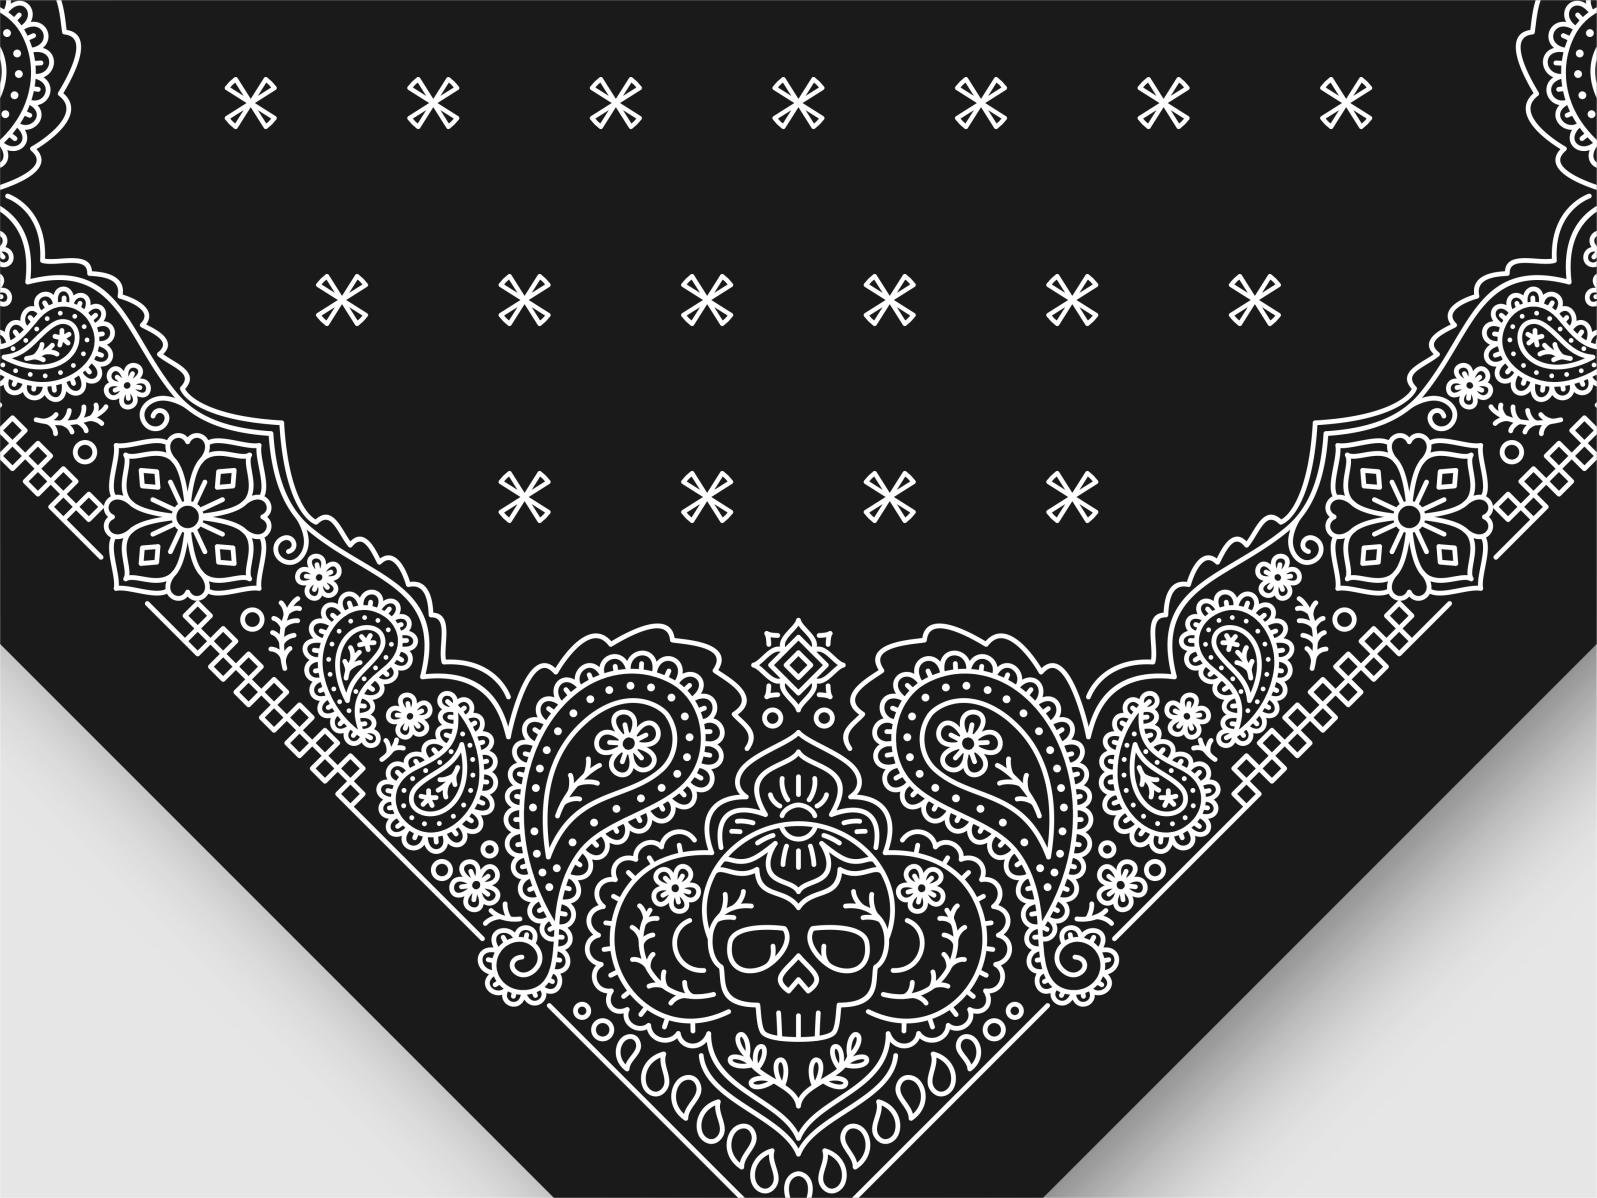 Bandana paisley pattern with skull by Bandanations by IrdatPurwadi on